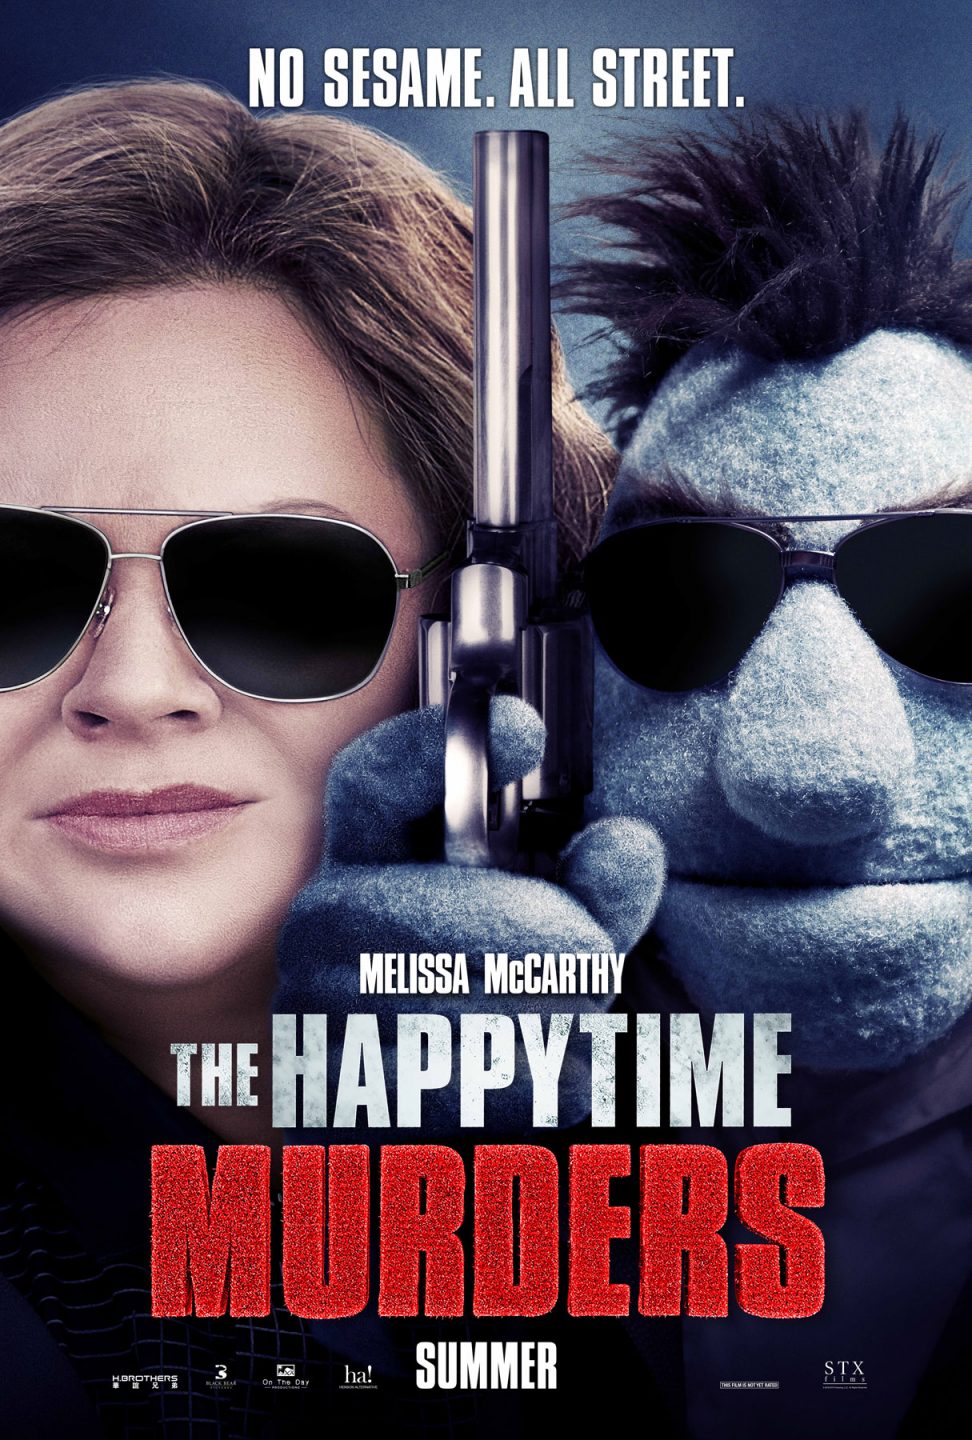 The Happytime Murders poster (STX Films/STX Entertainment)